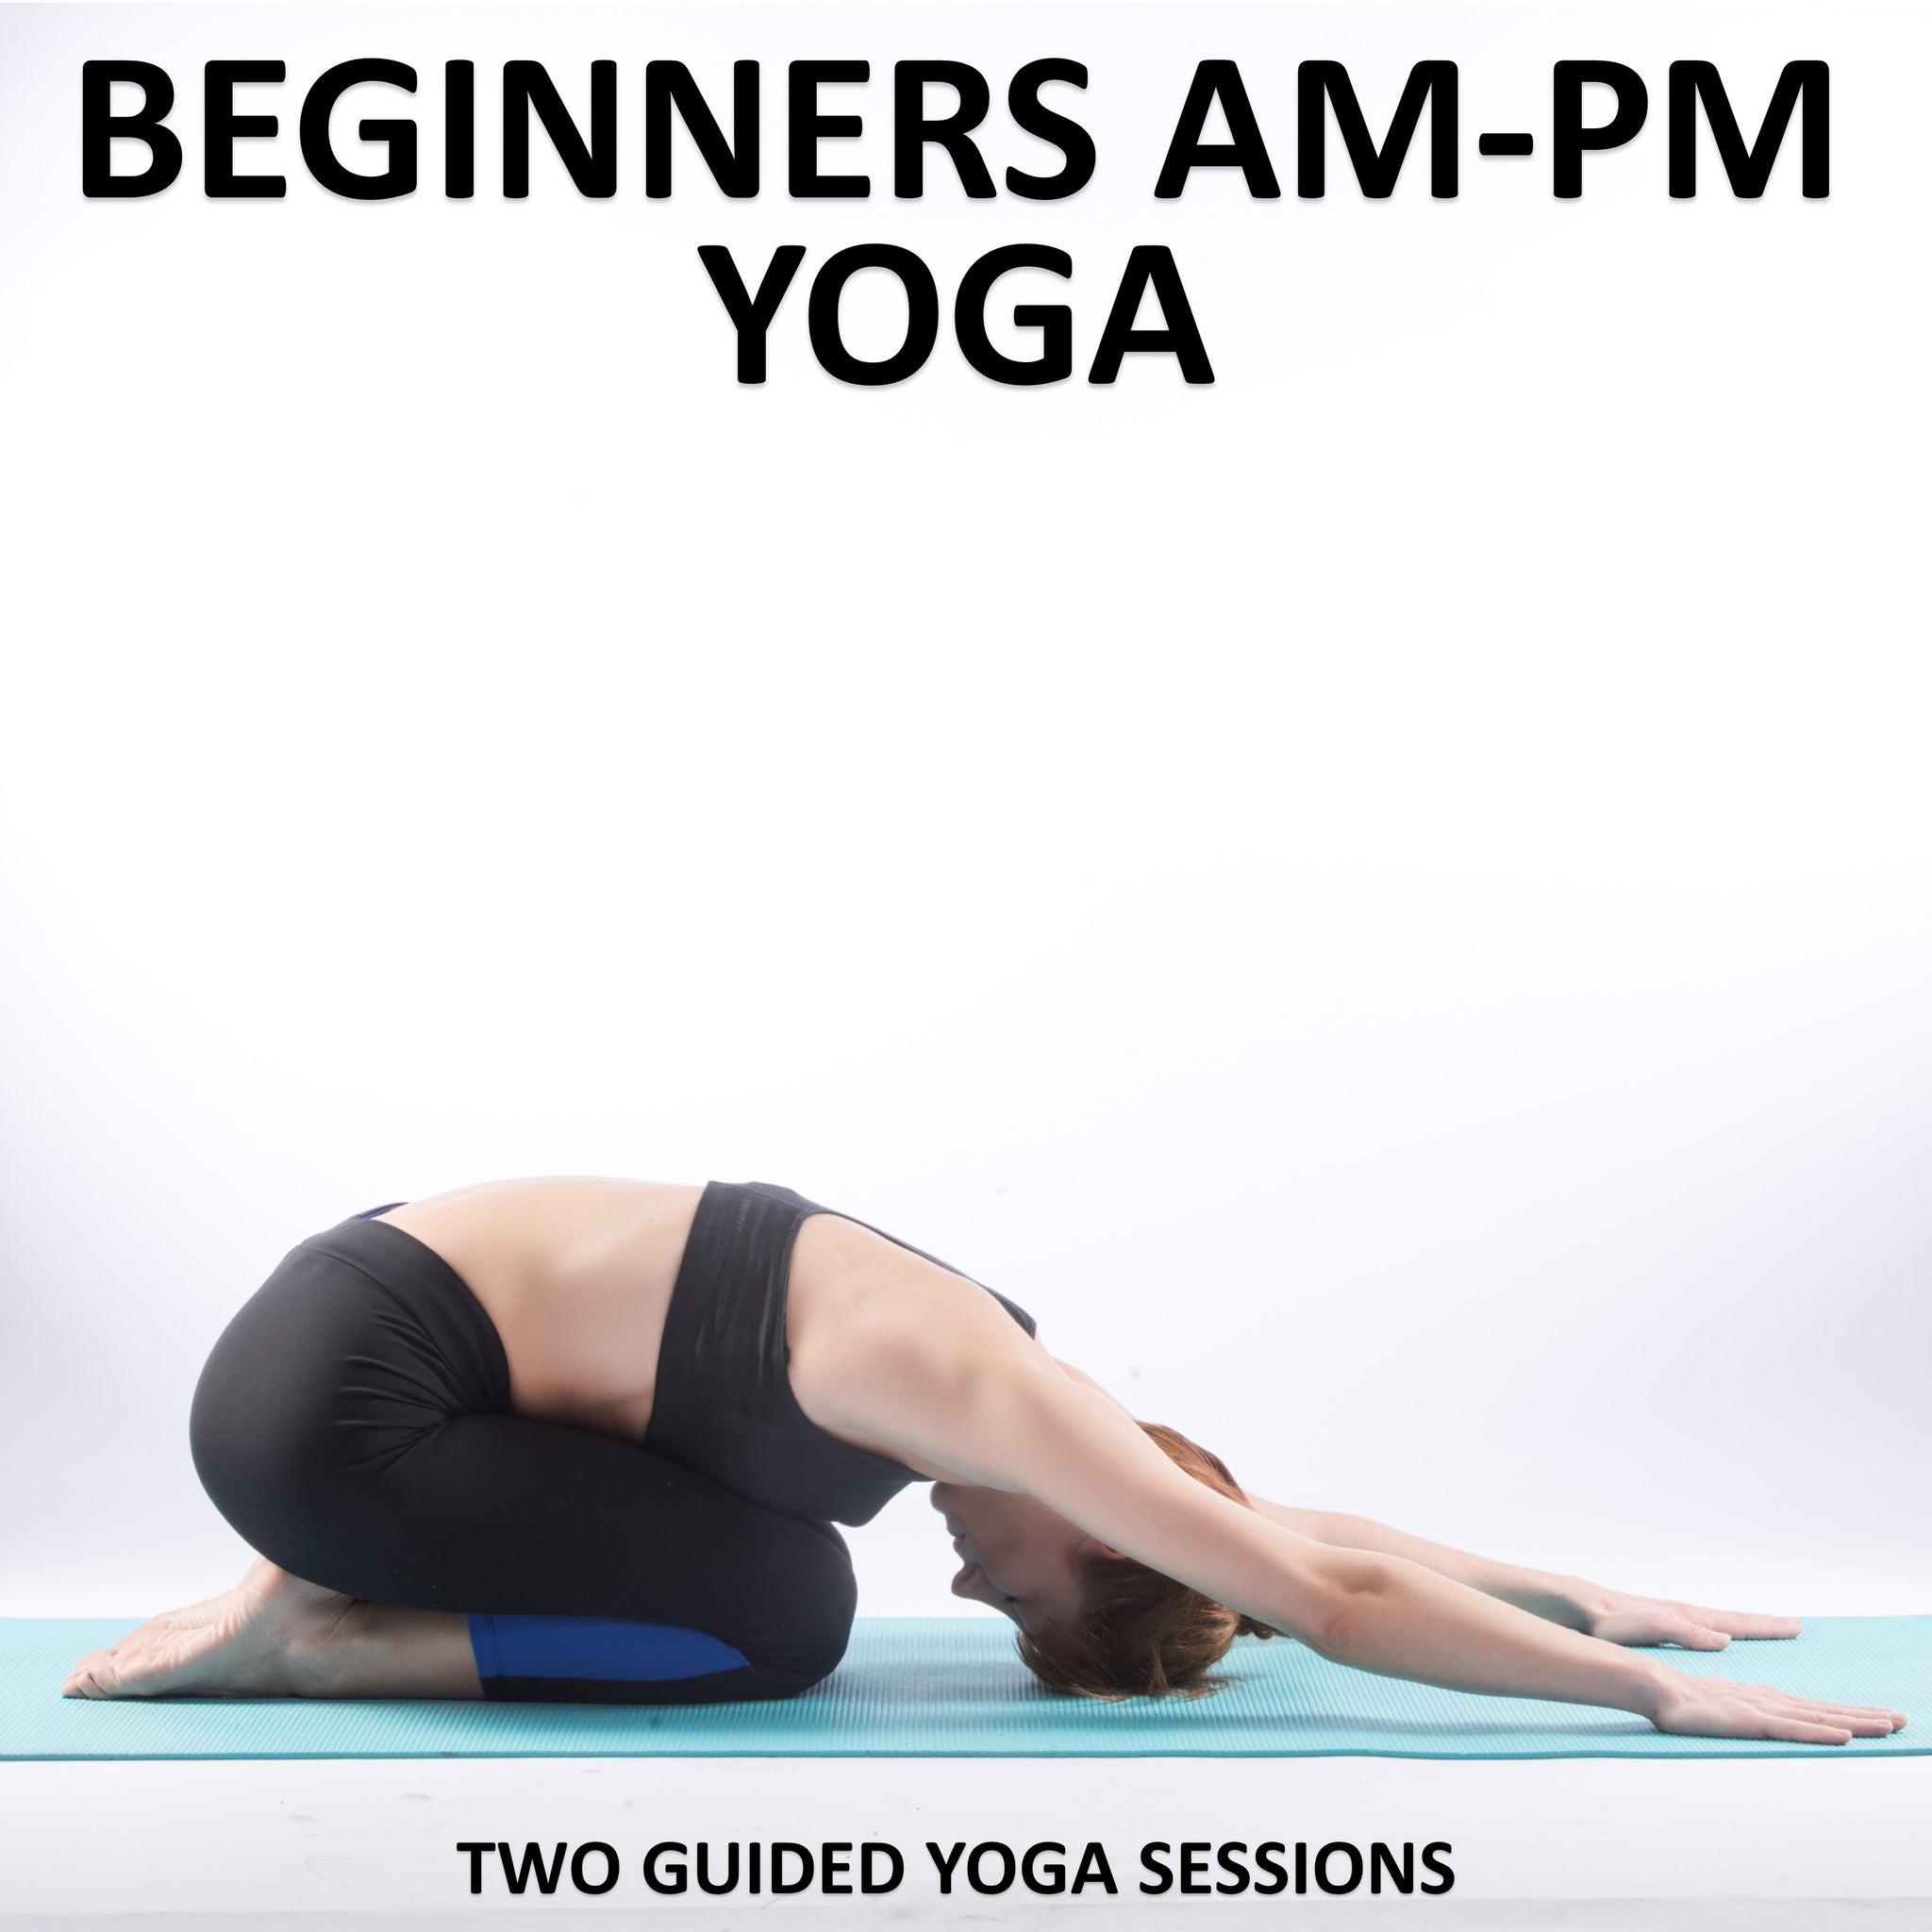 Improvers AM-PM Yoga